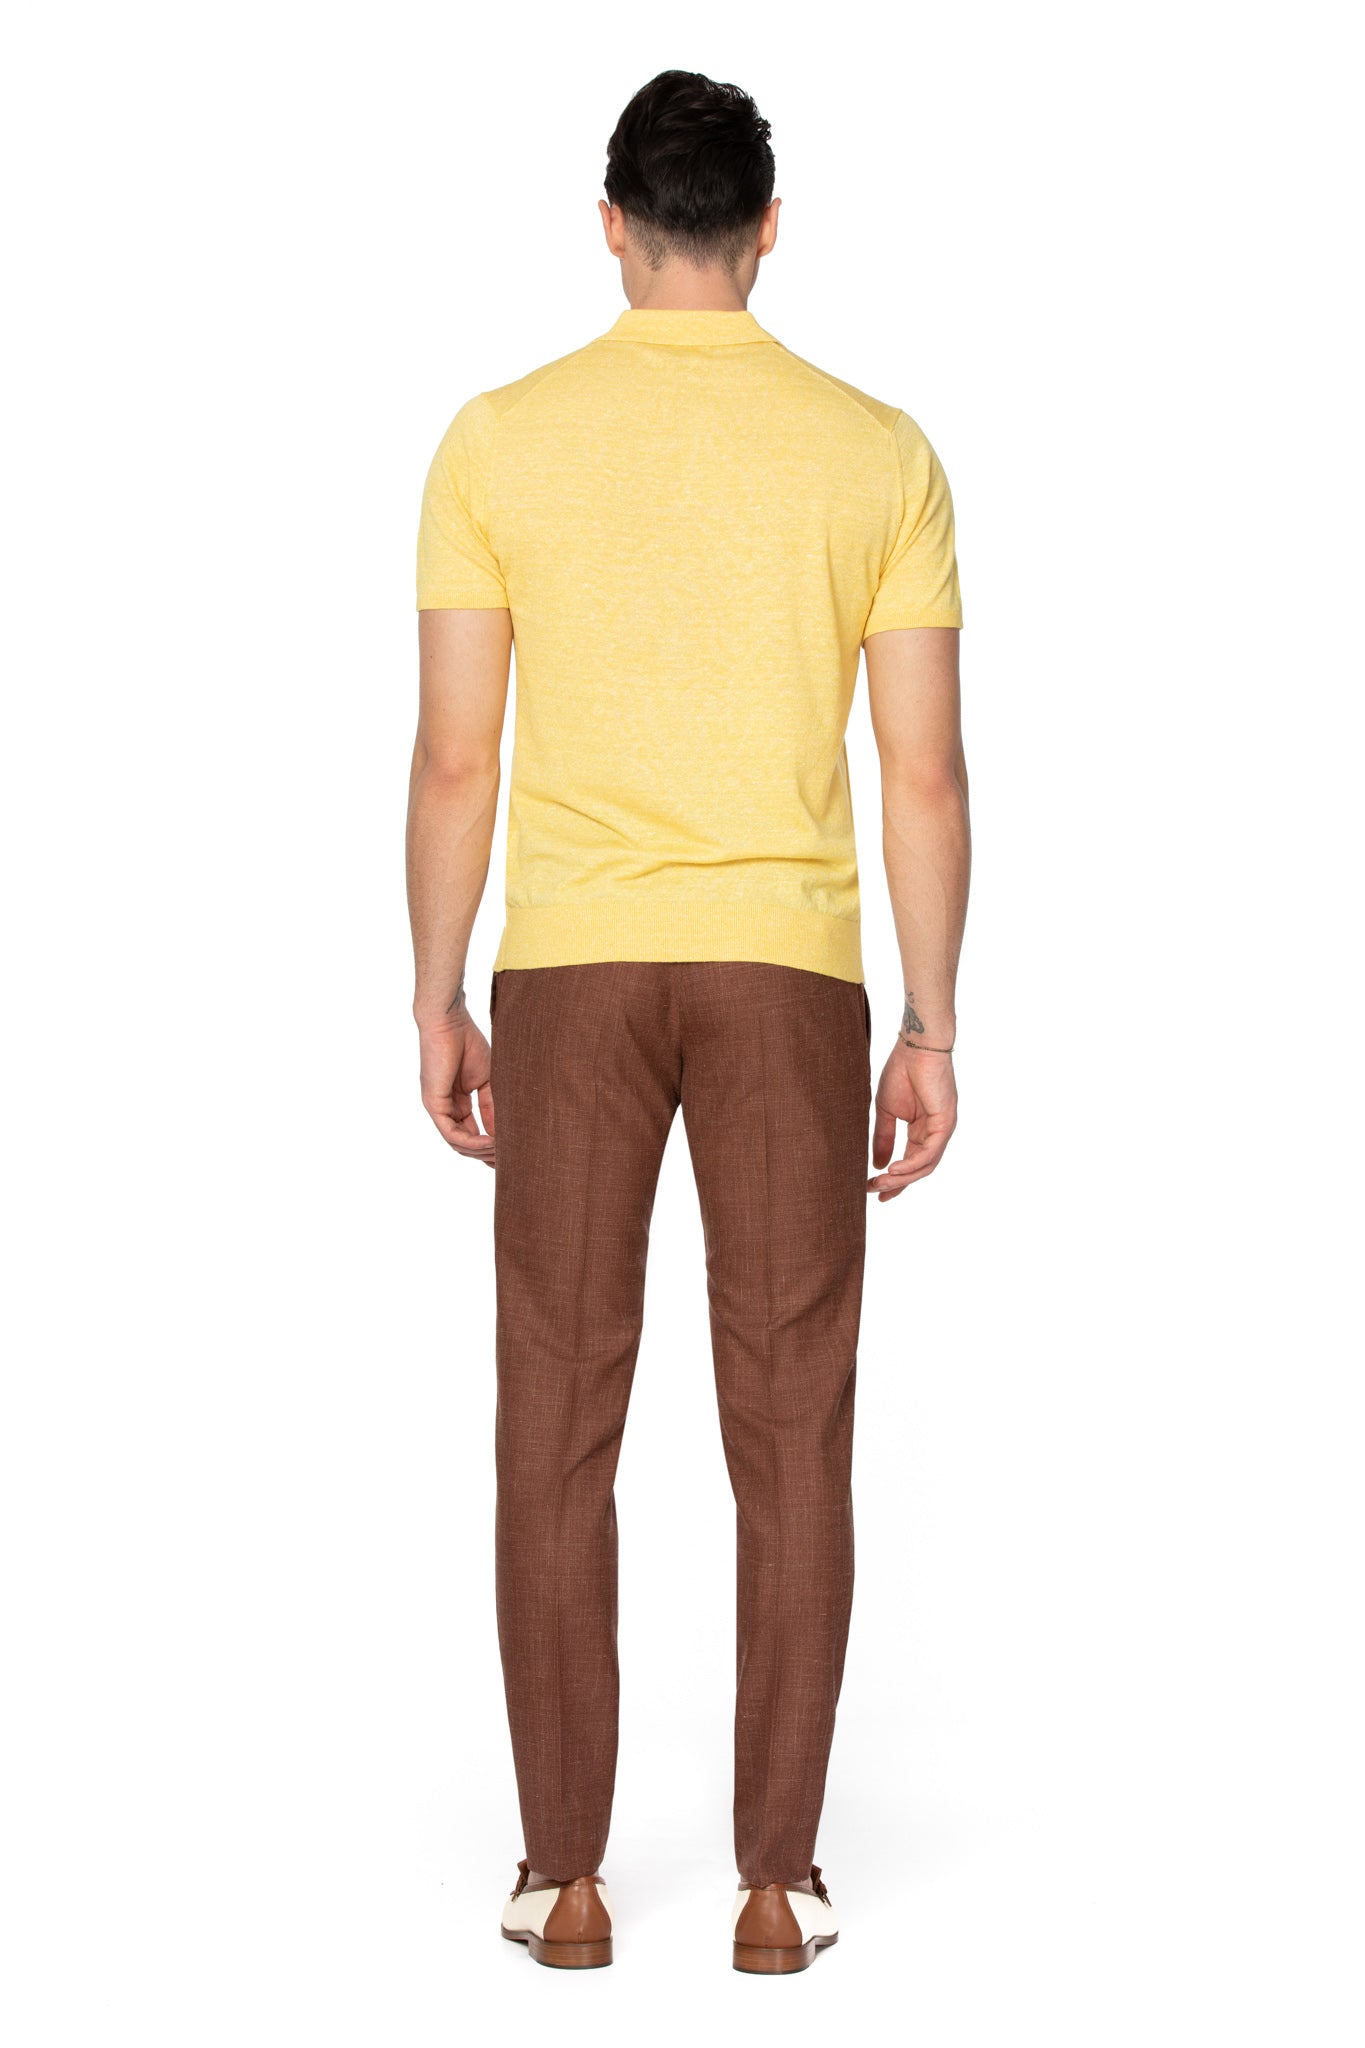 Yellow polo shirt in merino wool and linen